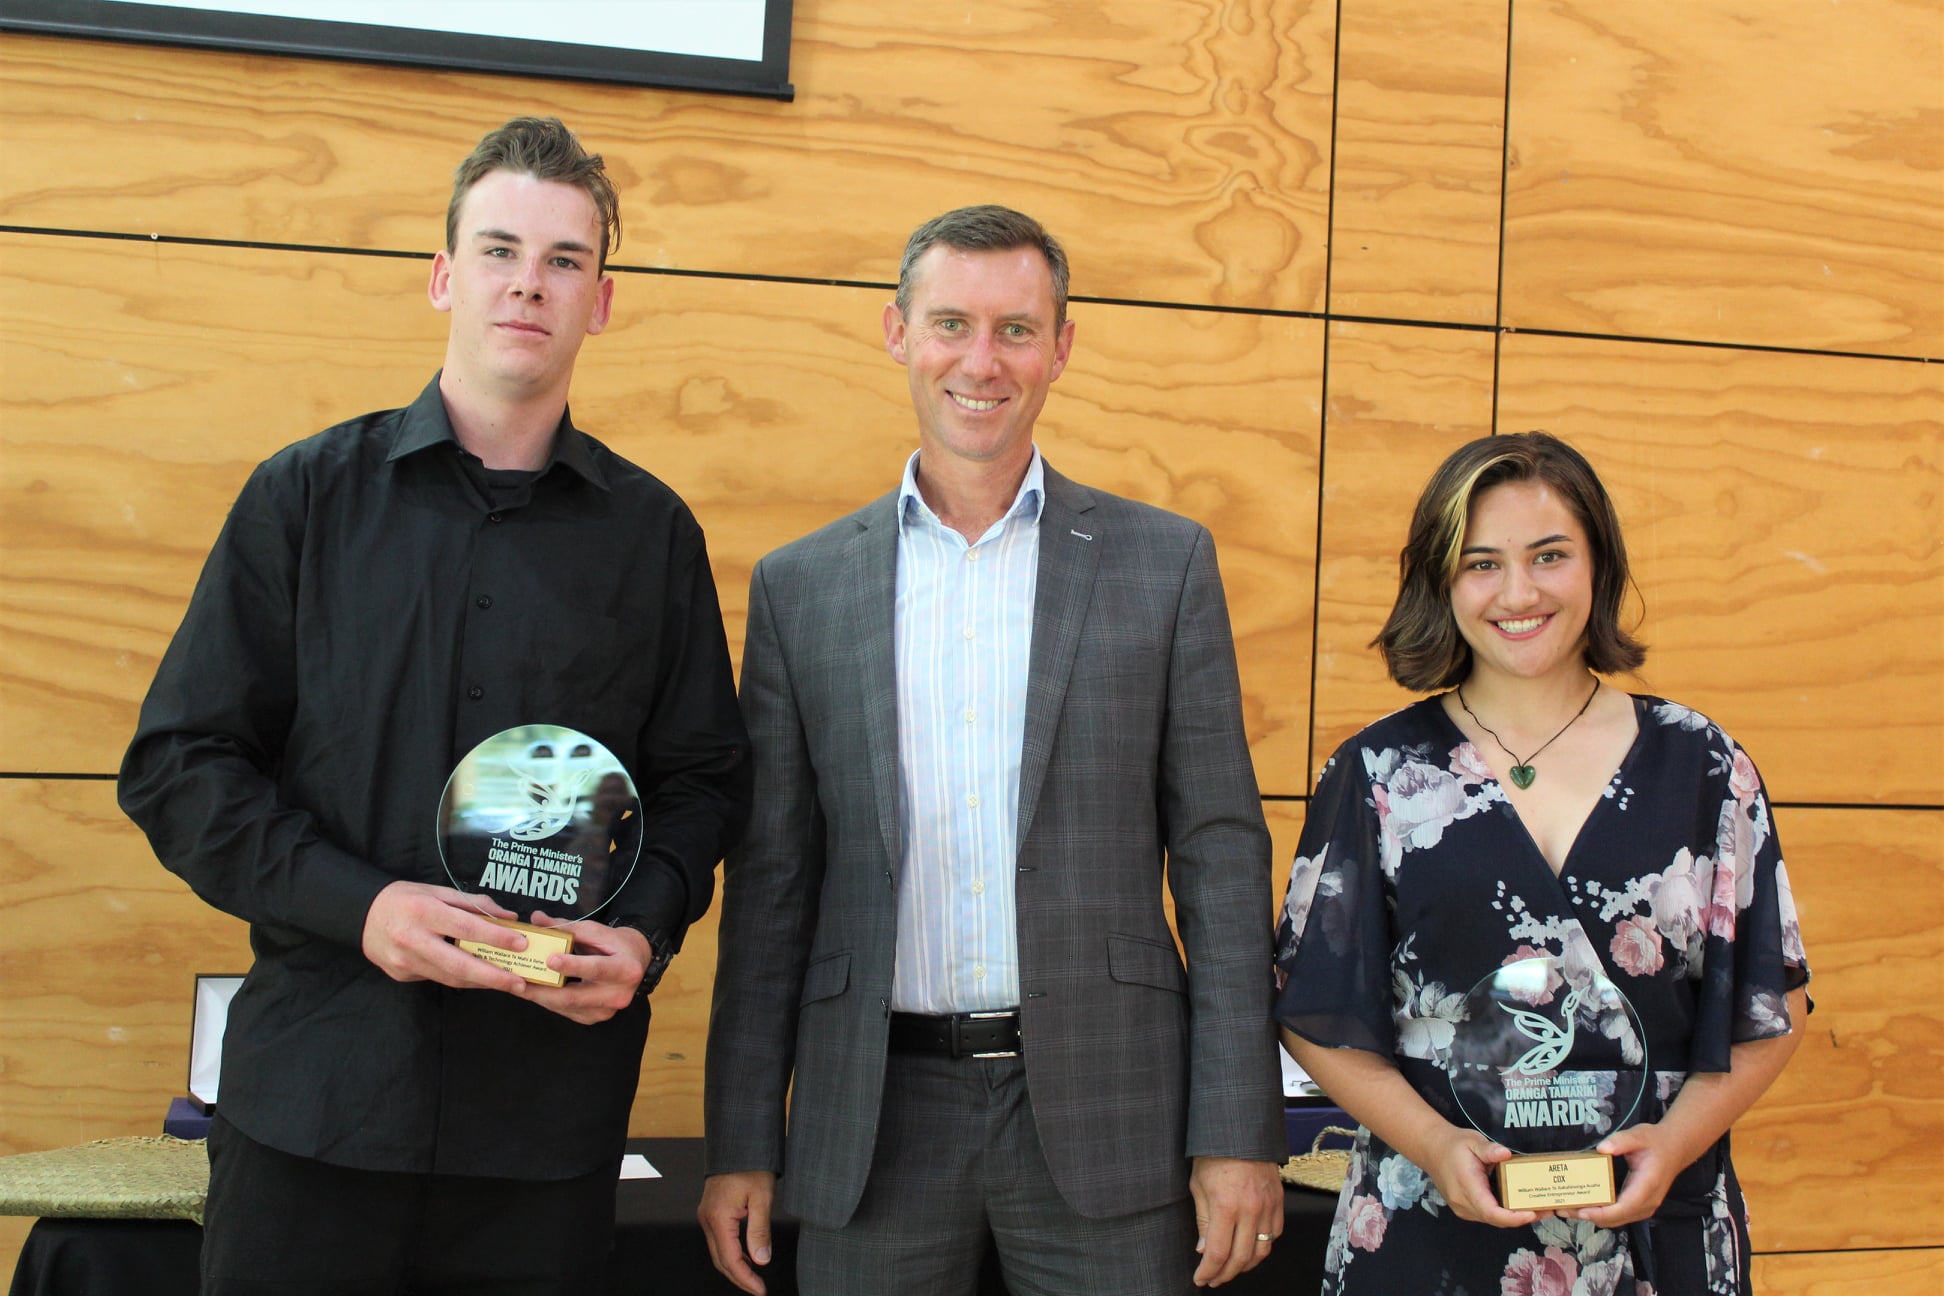 Award recipients Brody Field left and Areta Cox right with local MP Jamie Strange centre